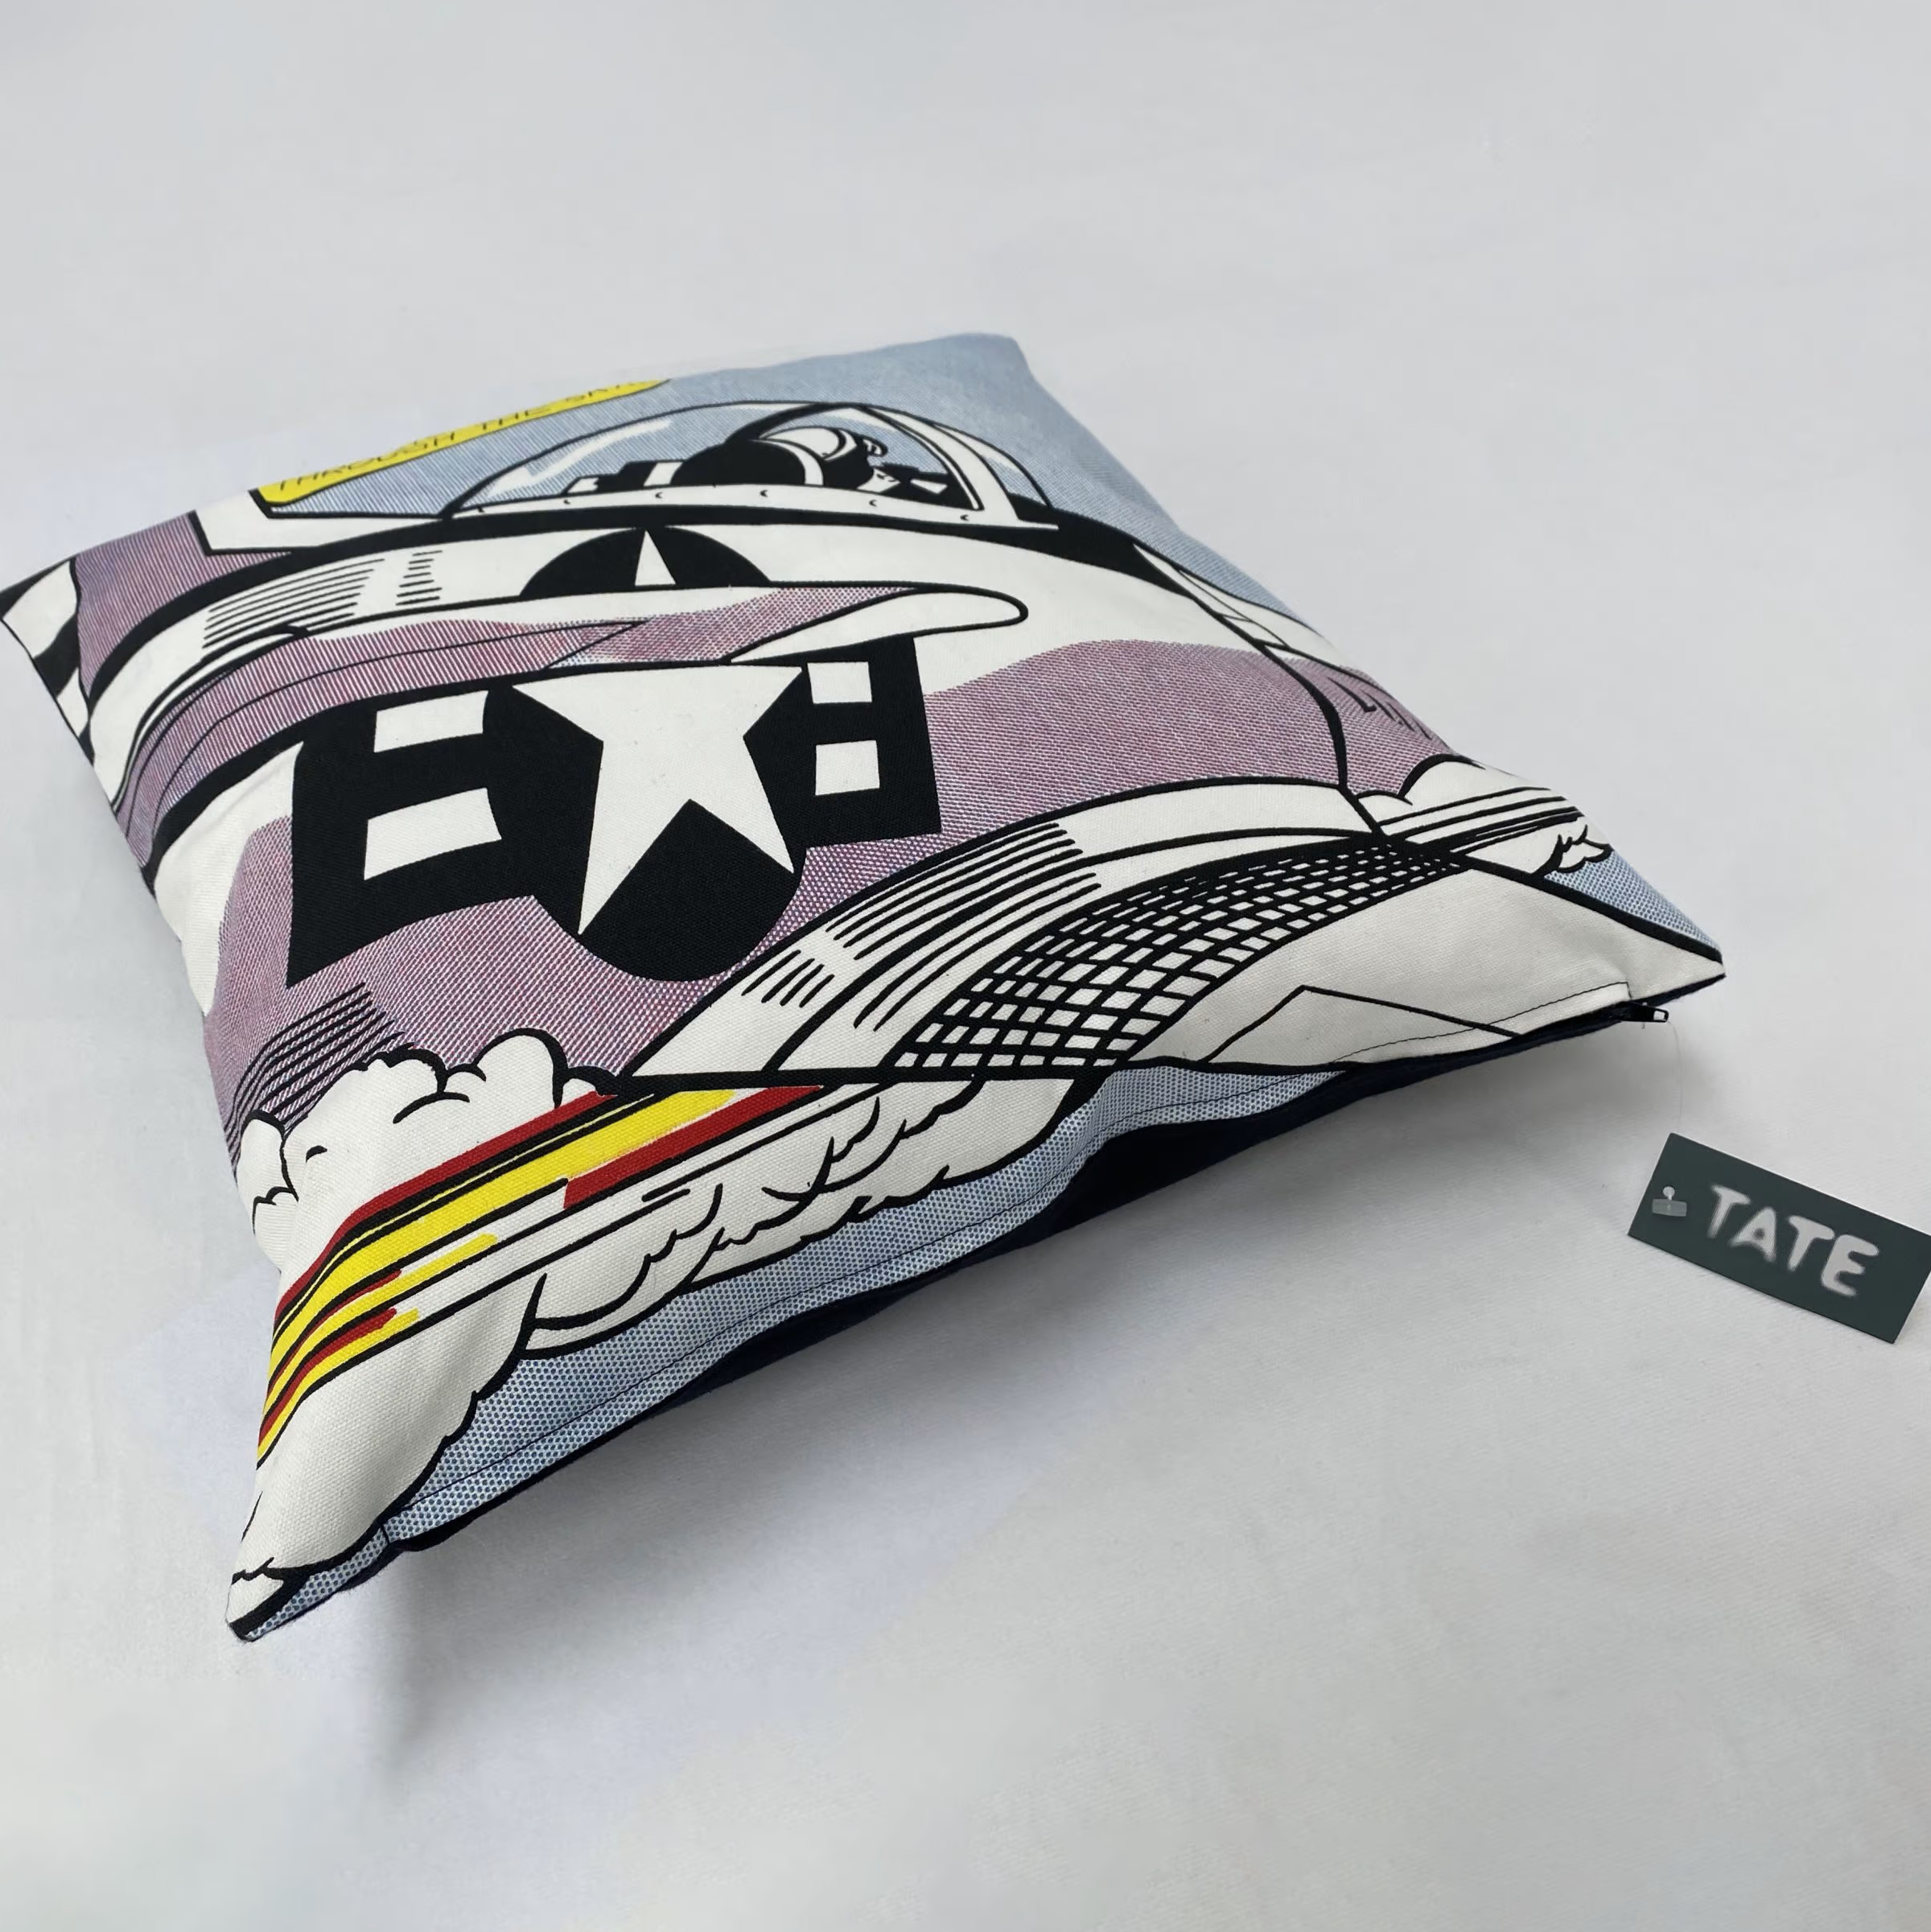 Tate whamm cushion cover digitally printed